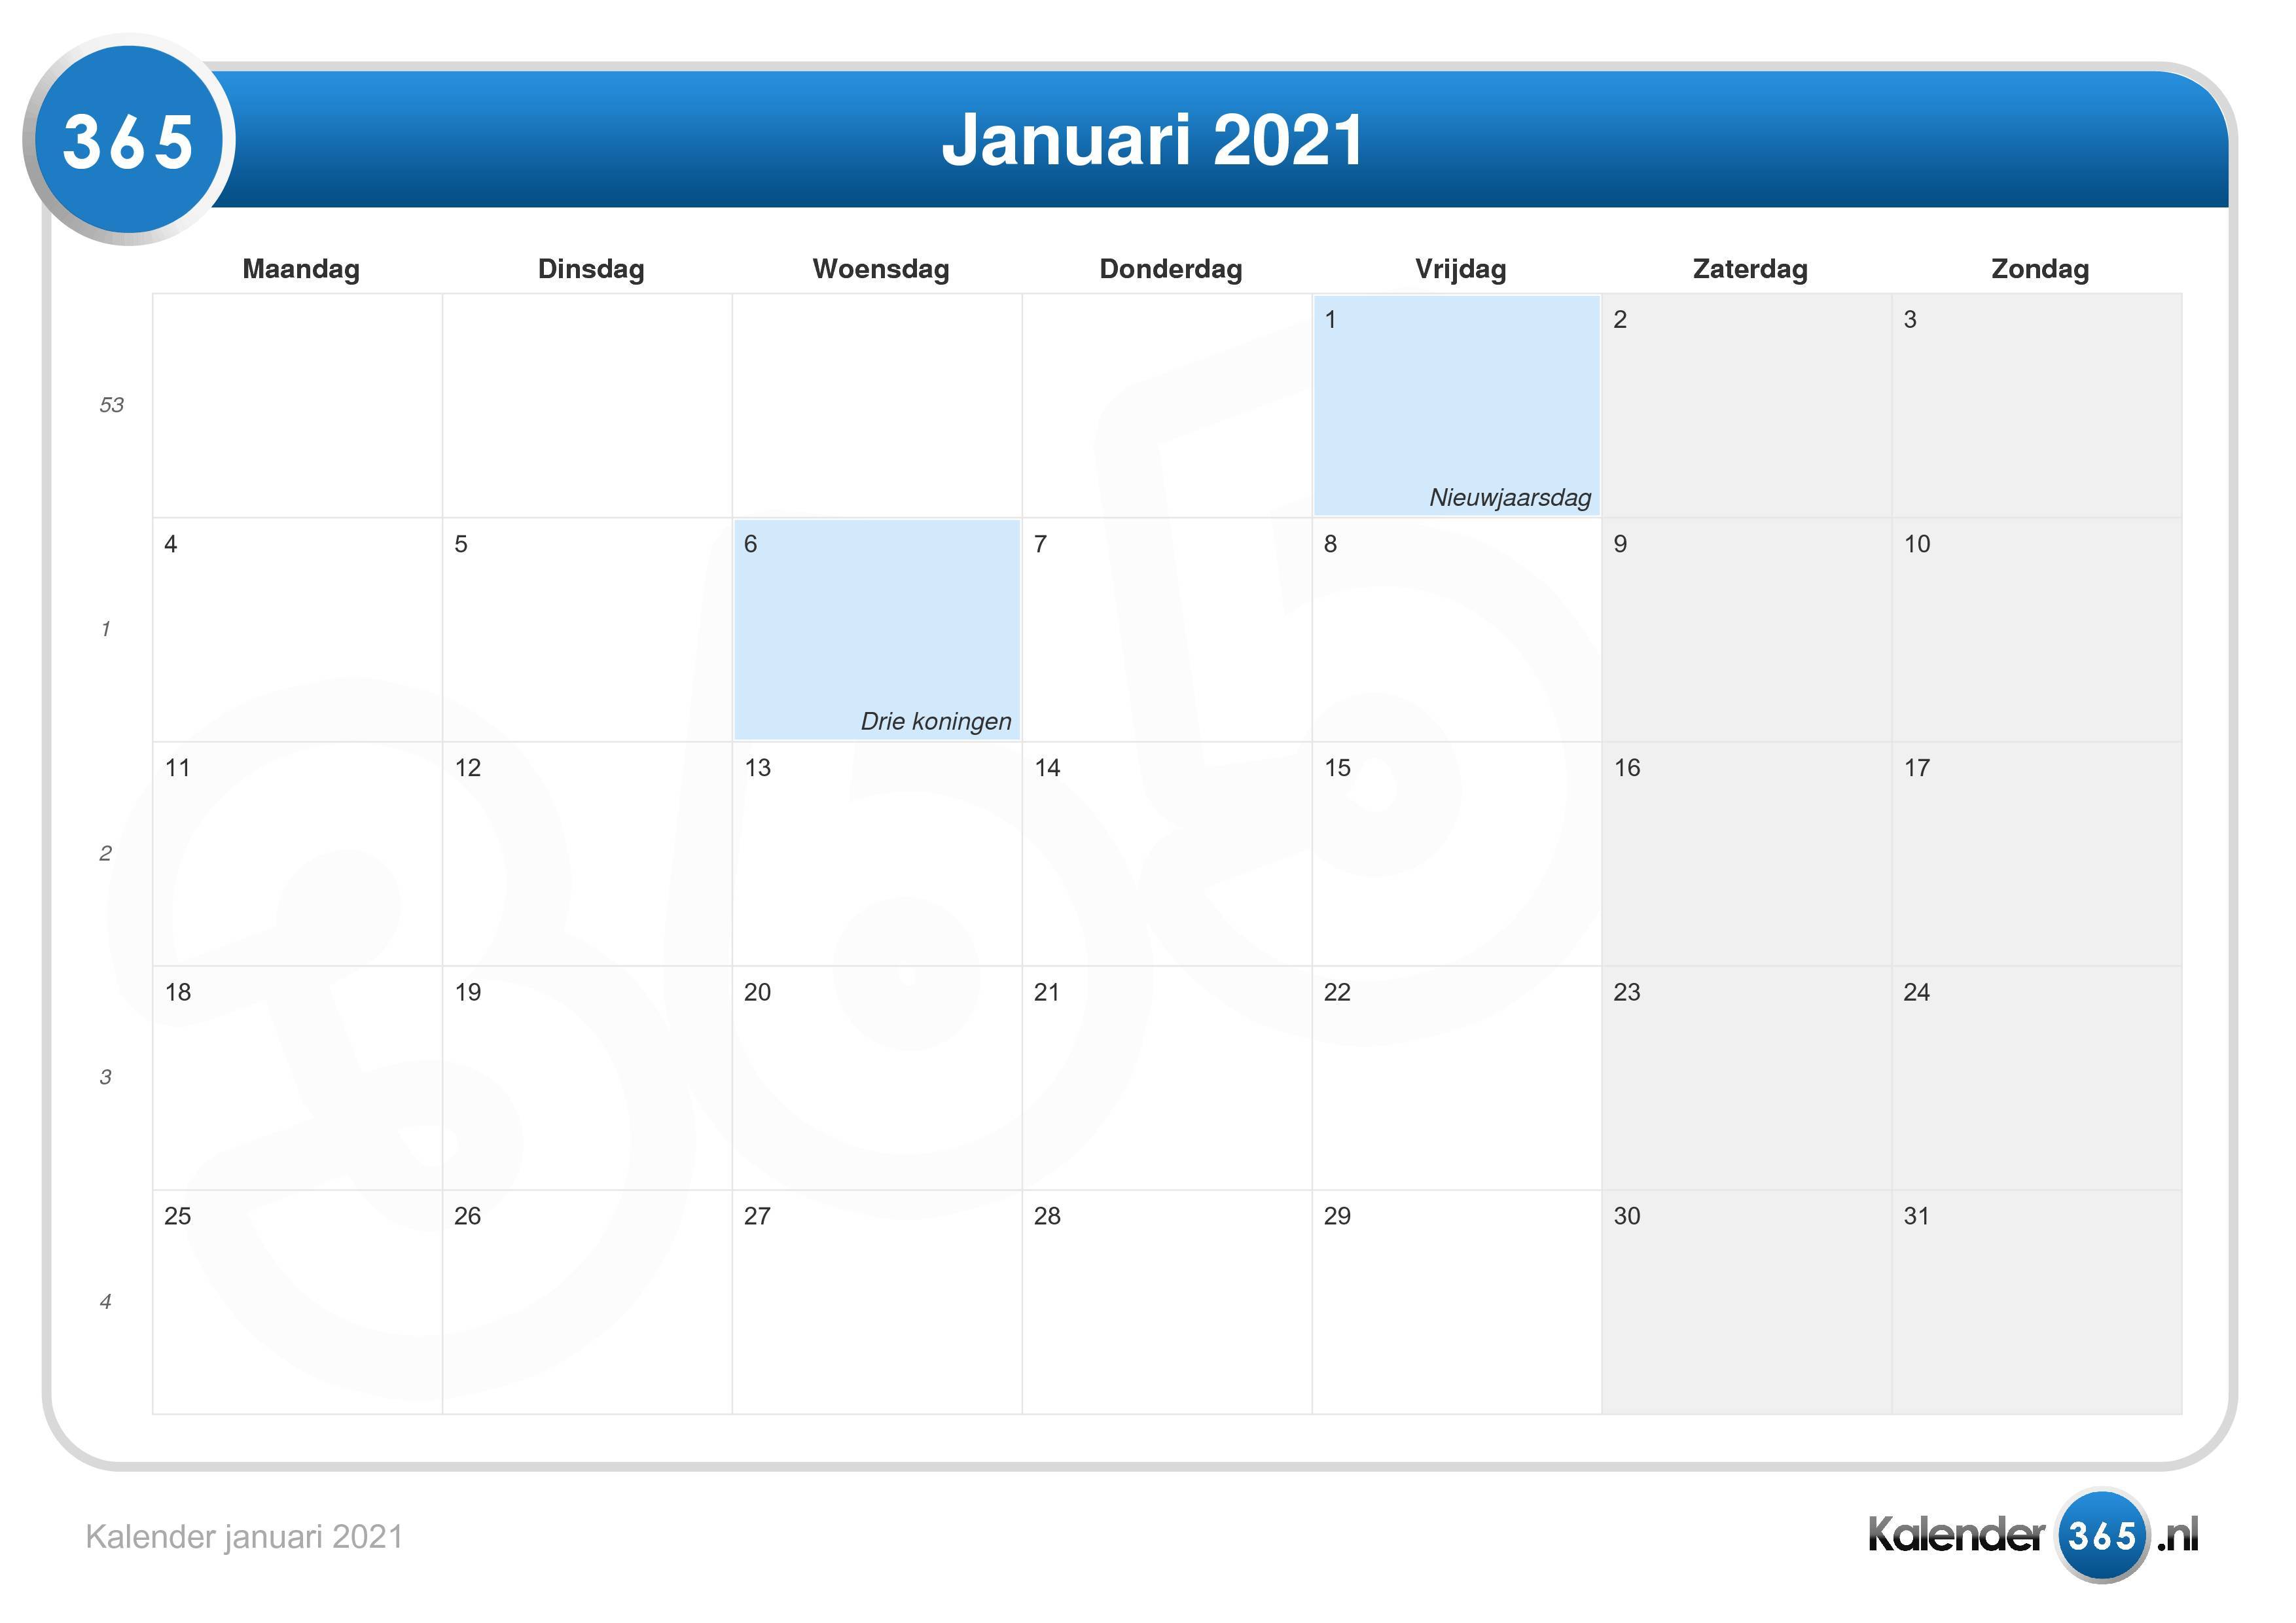 Kalender Januari 2021 Bekijk hier de maandkalender van januari 2021 inclusief weeknummers. https www kalender 365 nl kalender 2021 januari html